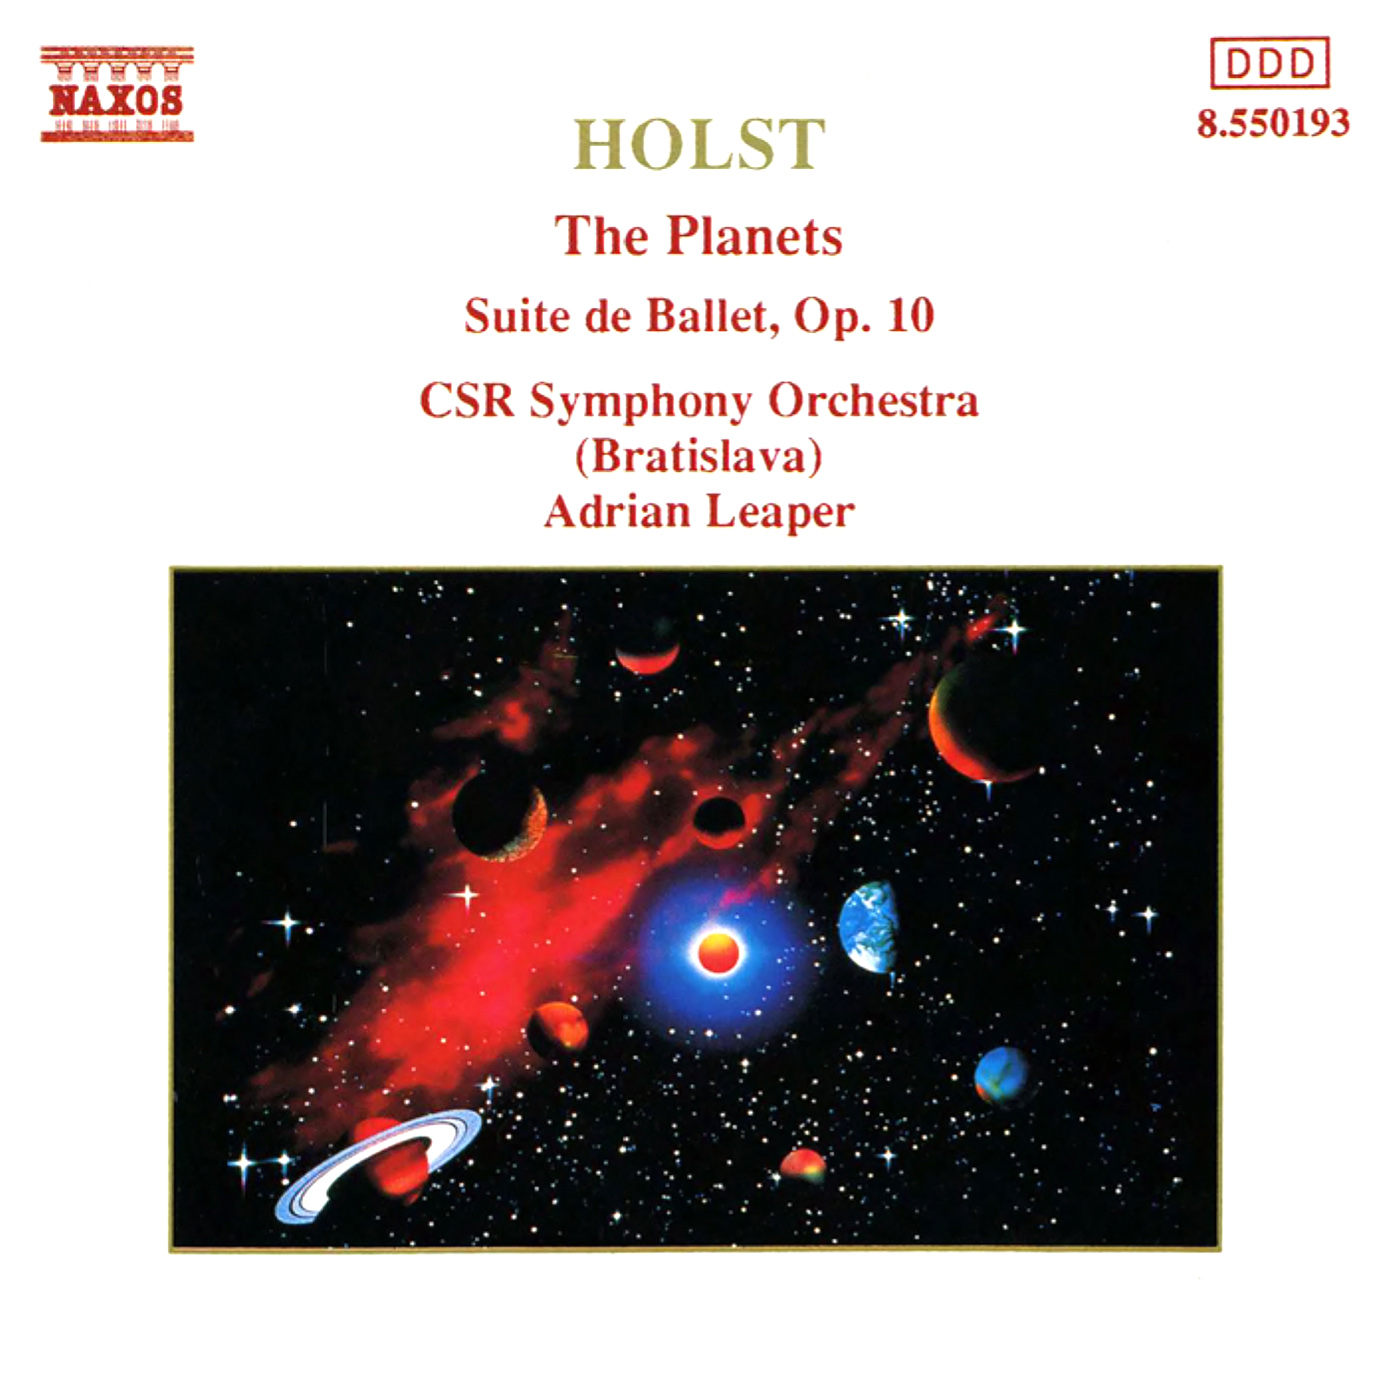 HOLST: Planets (The) / Suite de Ballet, Op. 10